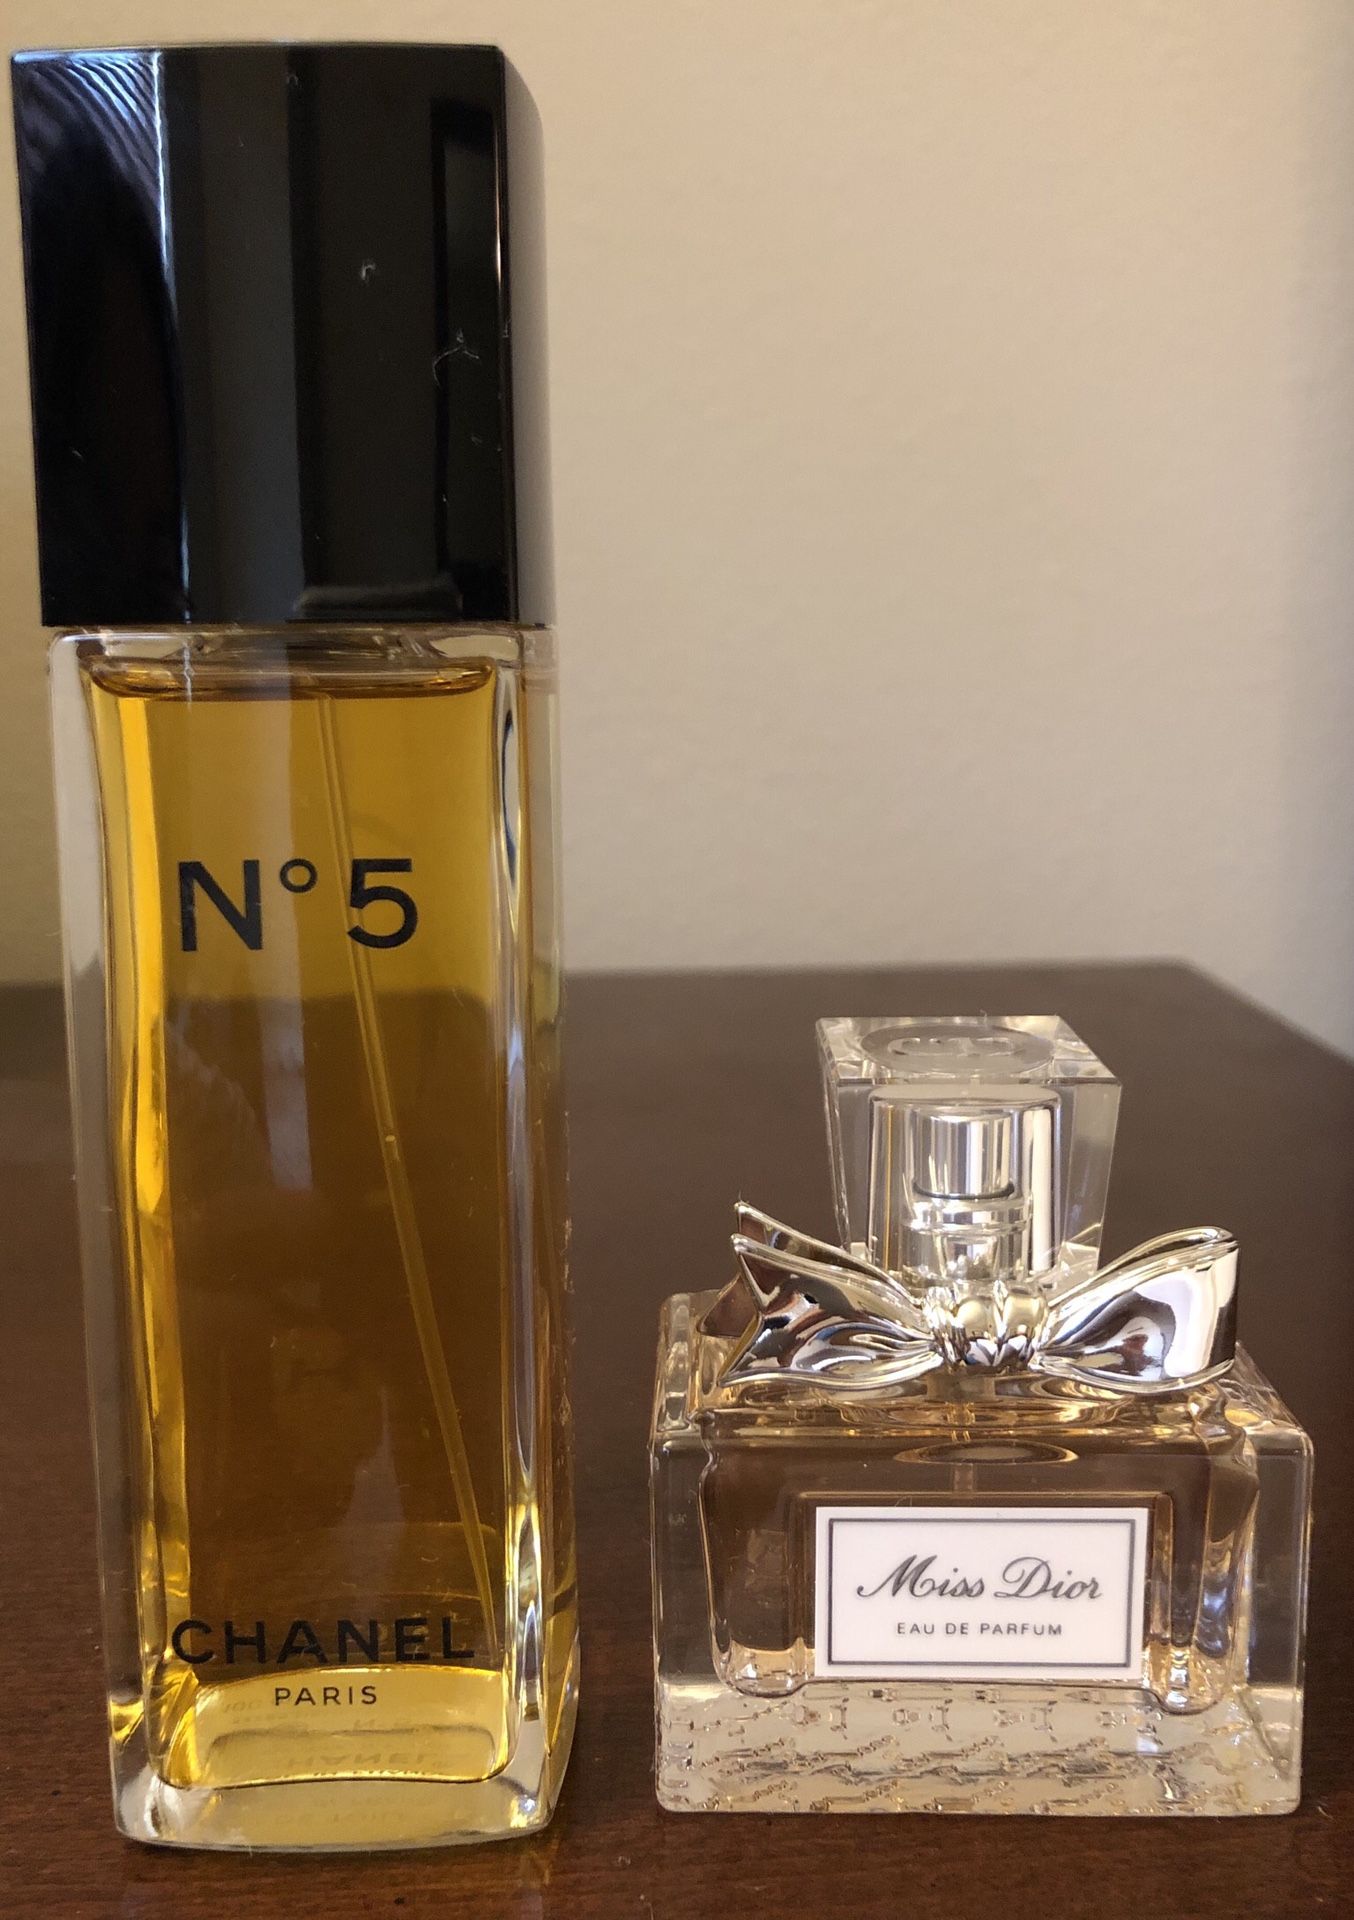 Chanel no. 5 & Miss Dior perfume